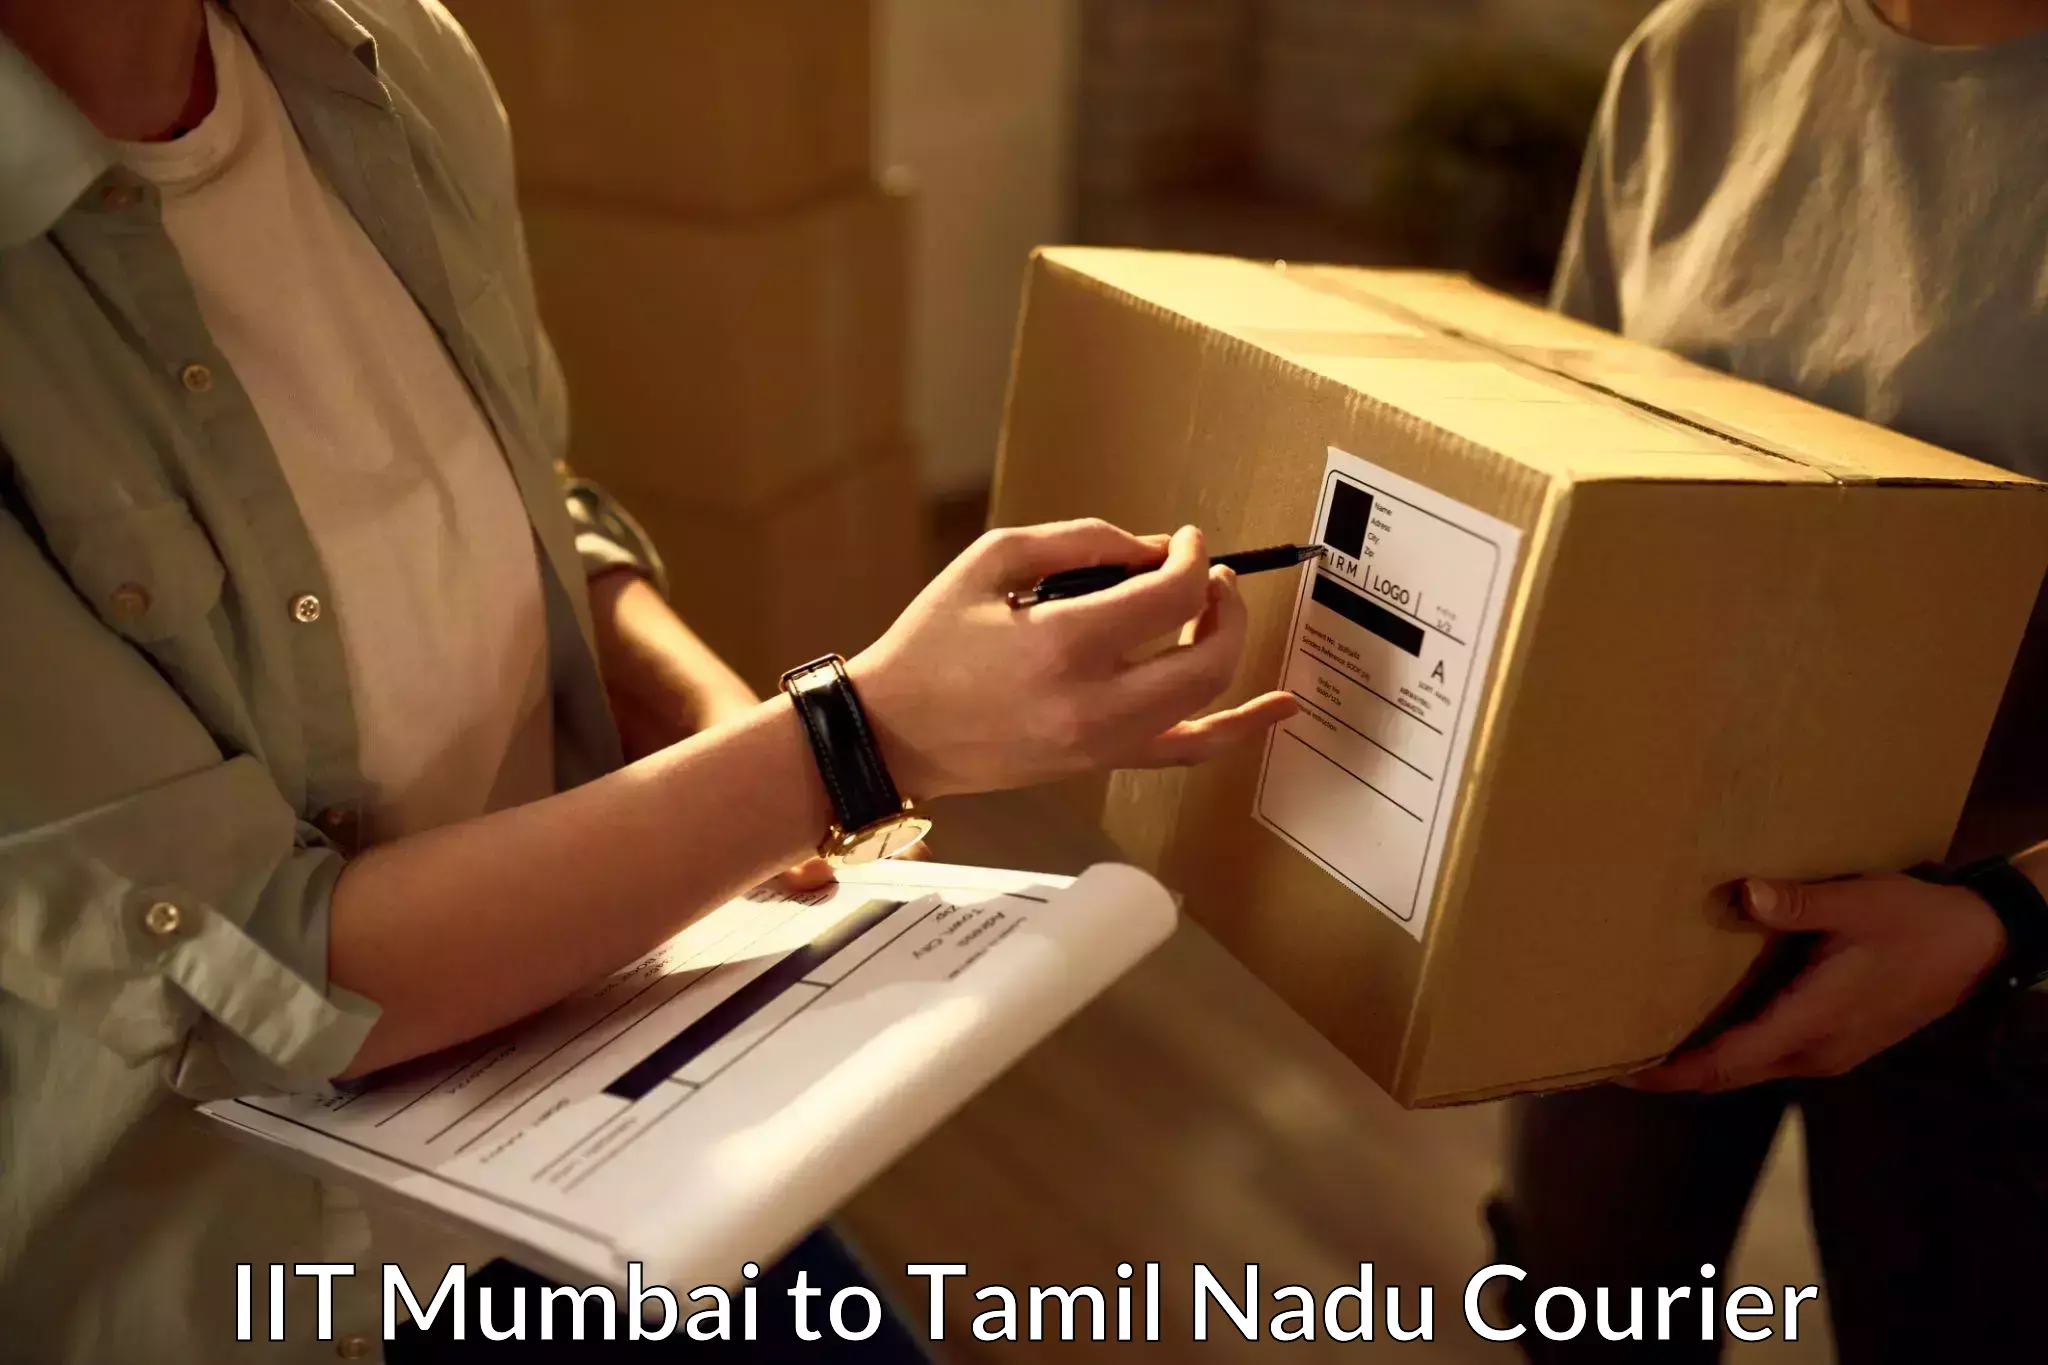 Reliable courier service IIT Mumbai to Sriperumbudur